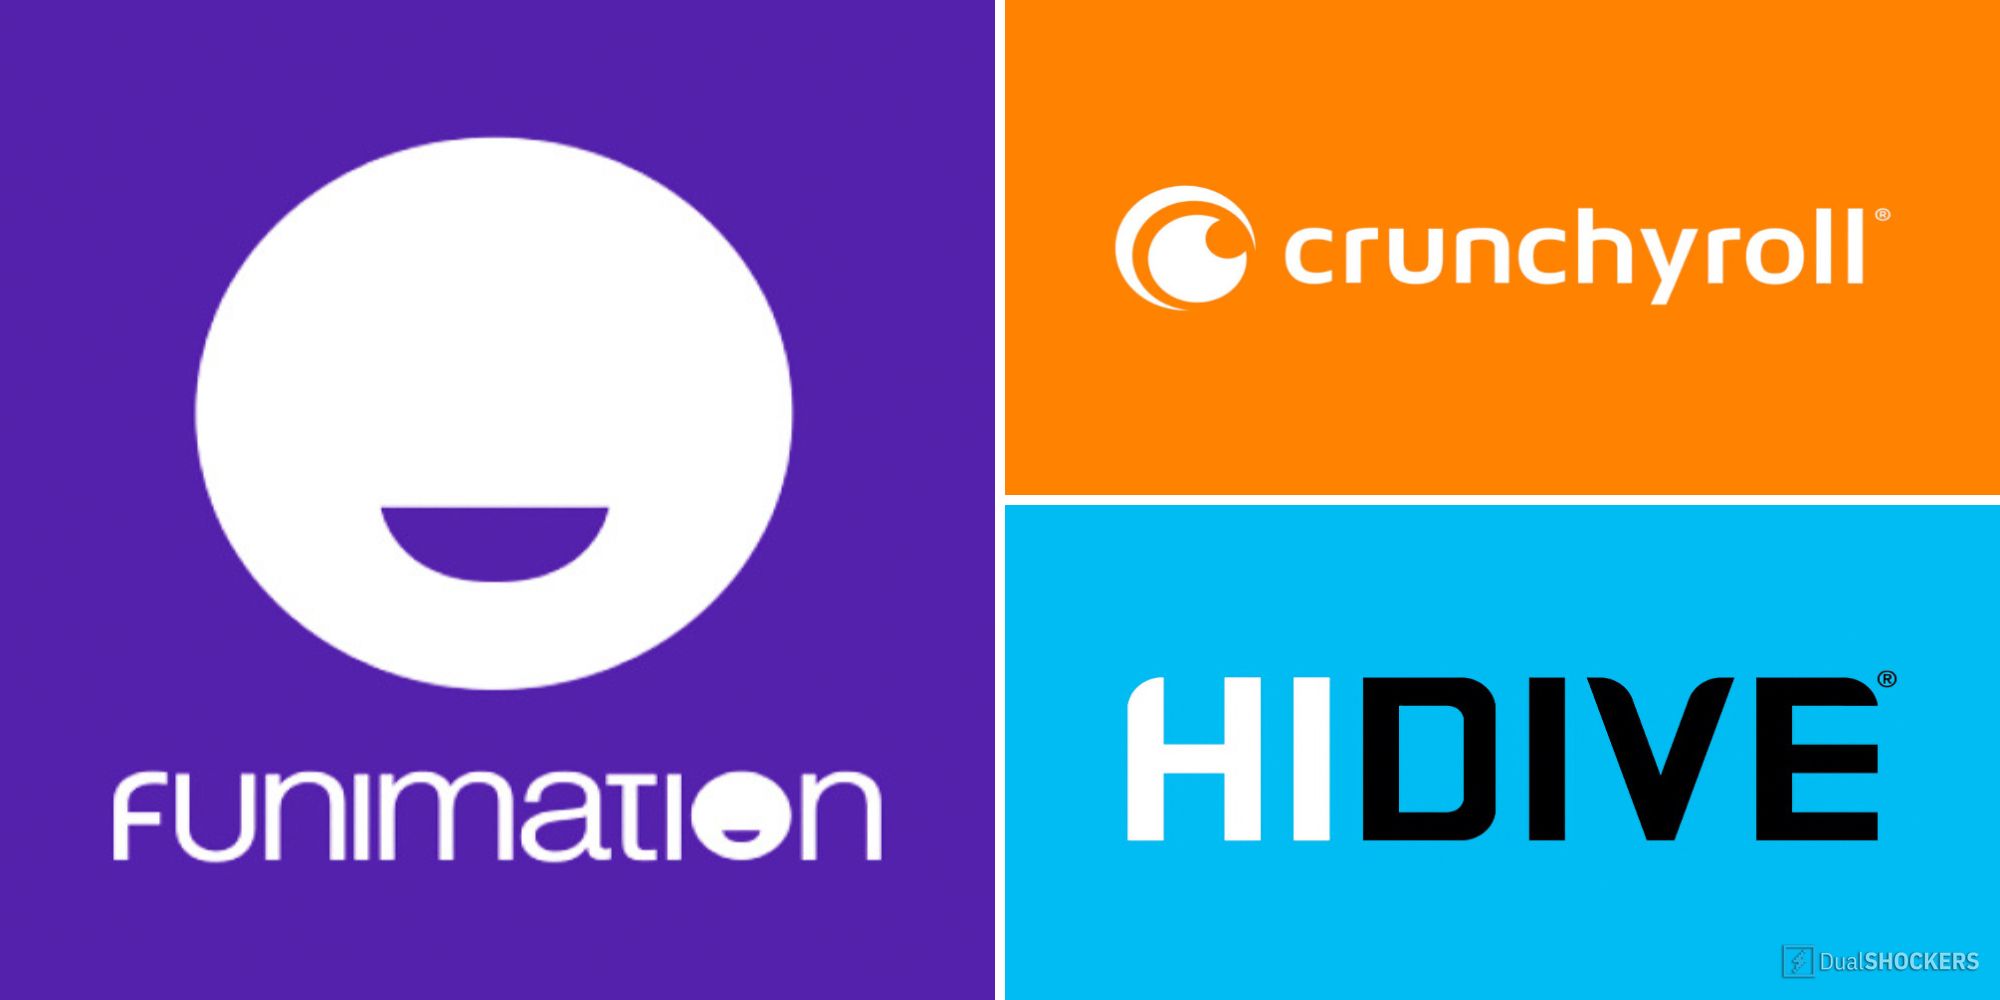 VRV vs Funimation vs Hulu vs Crunchyroll vs HIDIVE vs Netflix: Dub